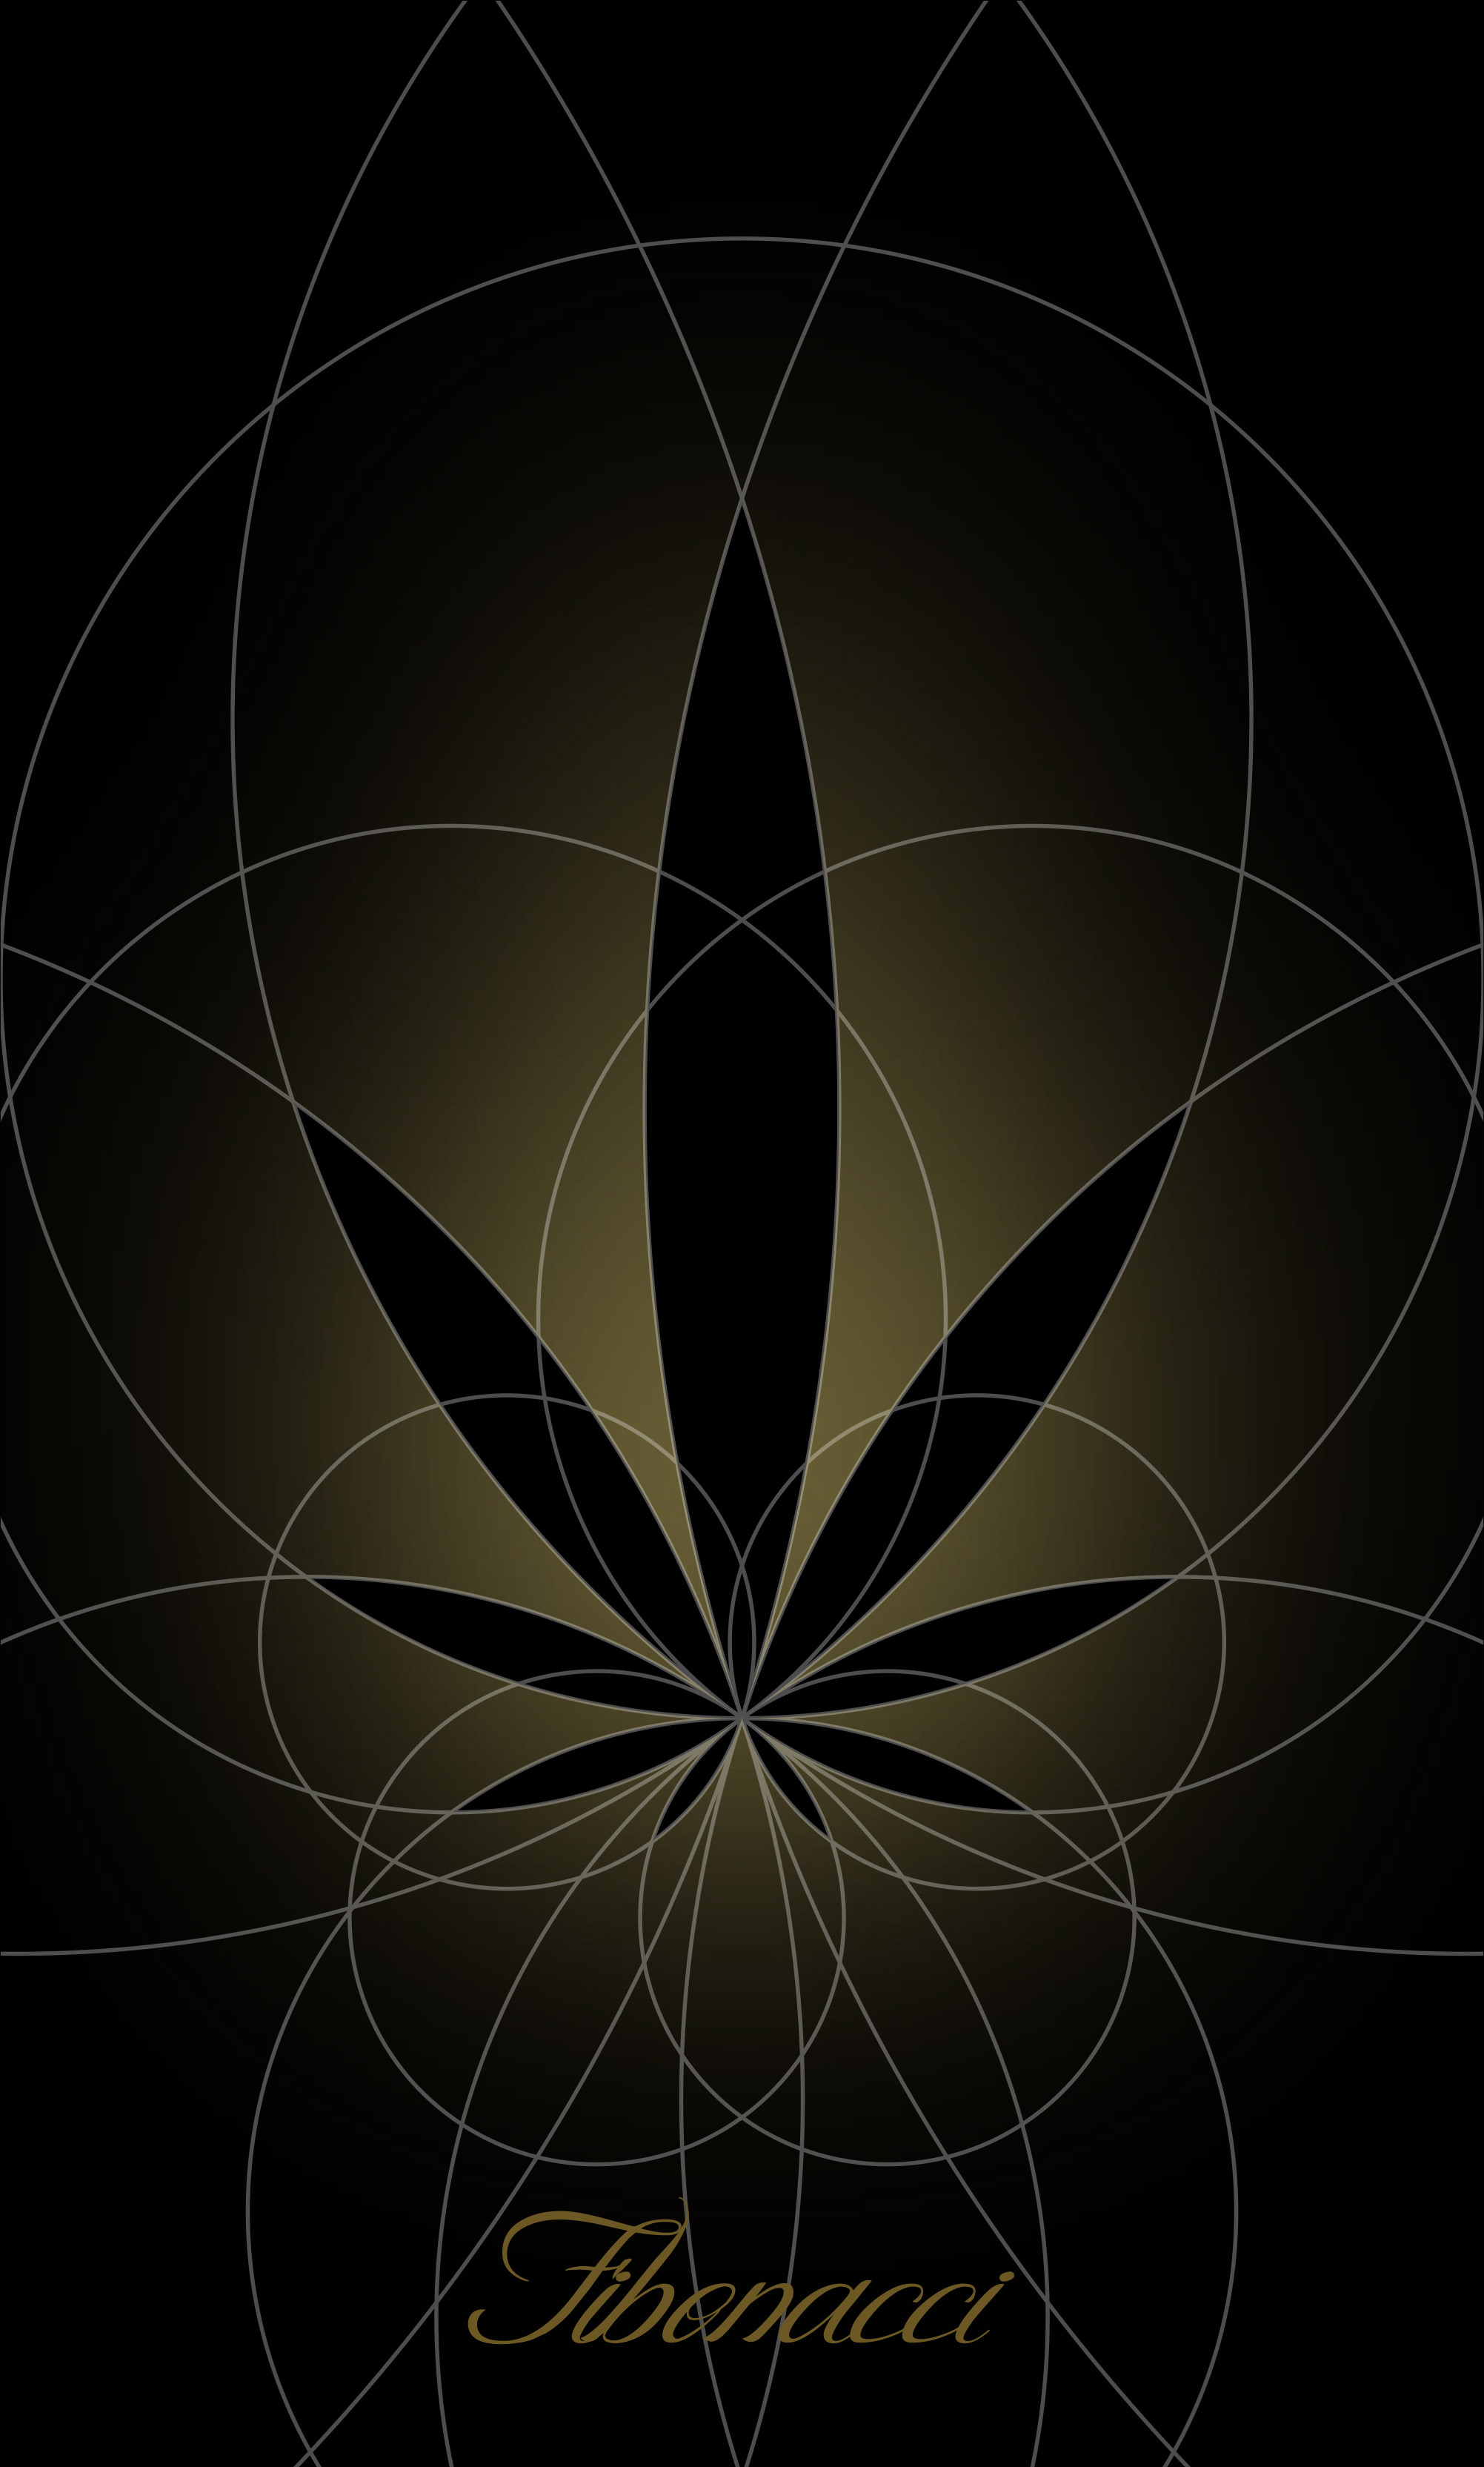 2003x3329 Cannabis golden ratio design by zbozo 30/09/2015